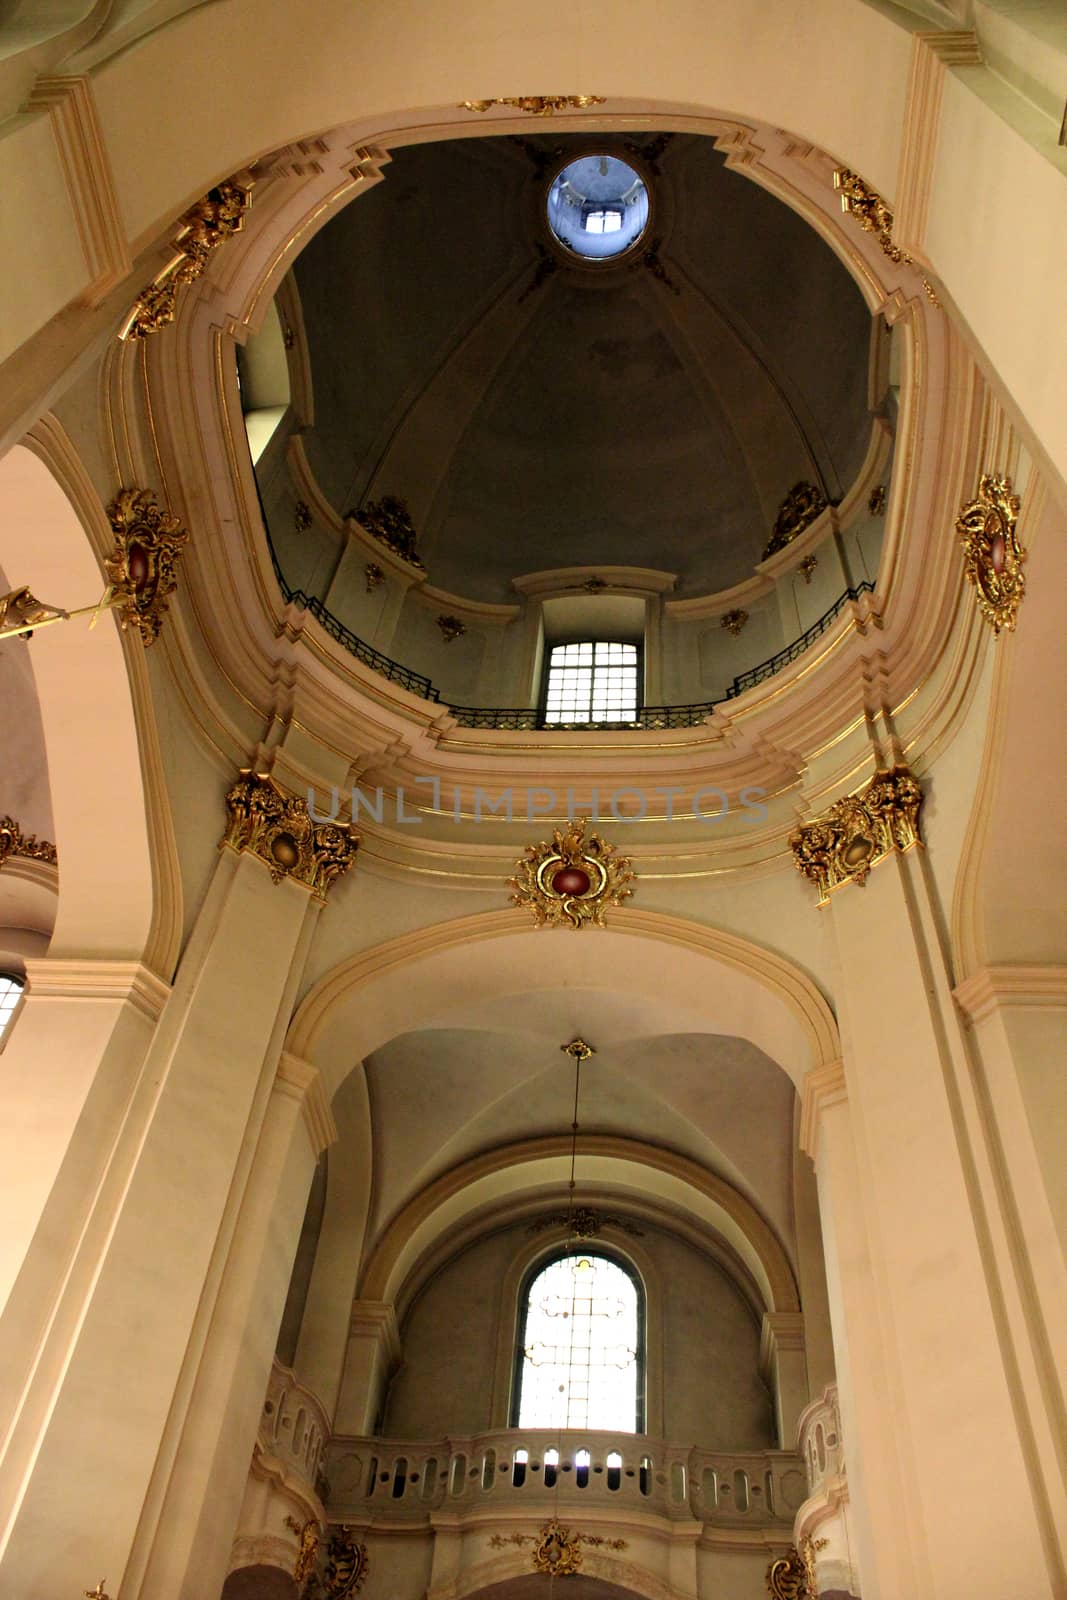 high arch in the beautiful Catholic church